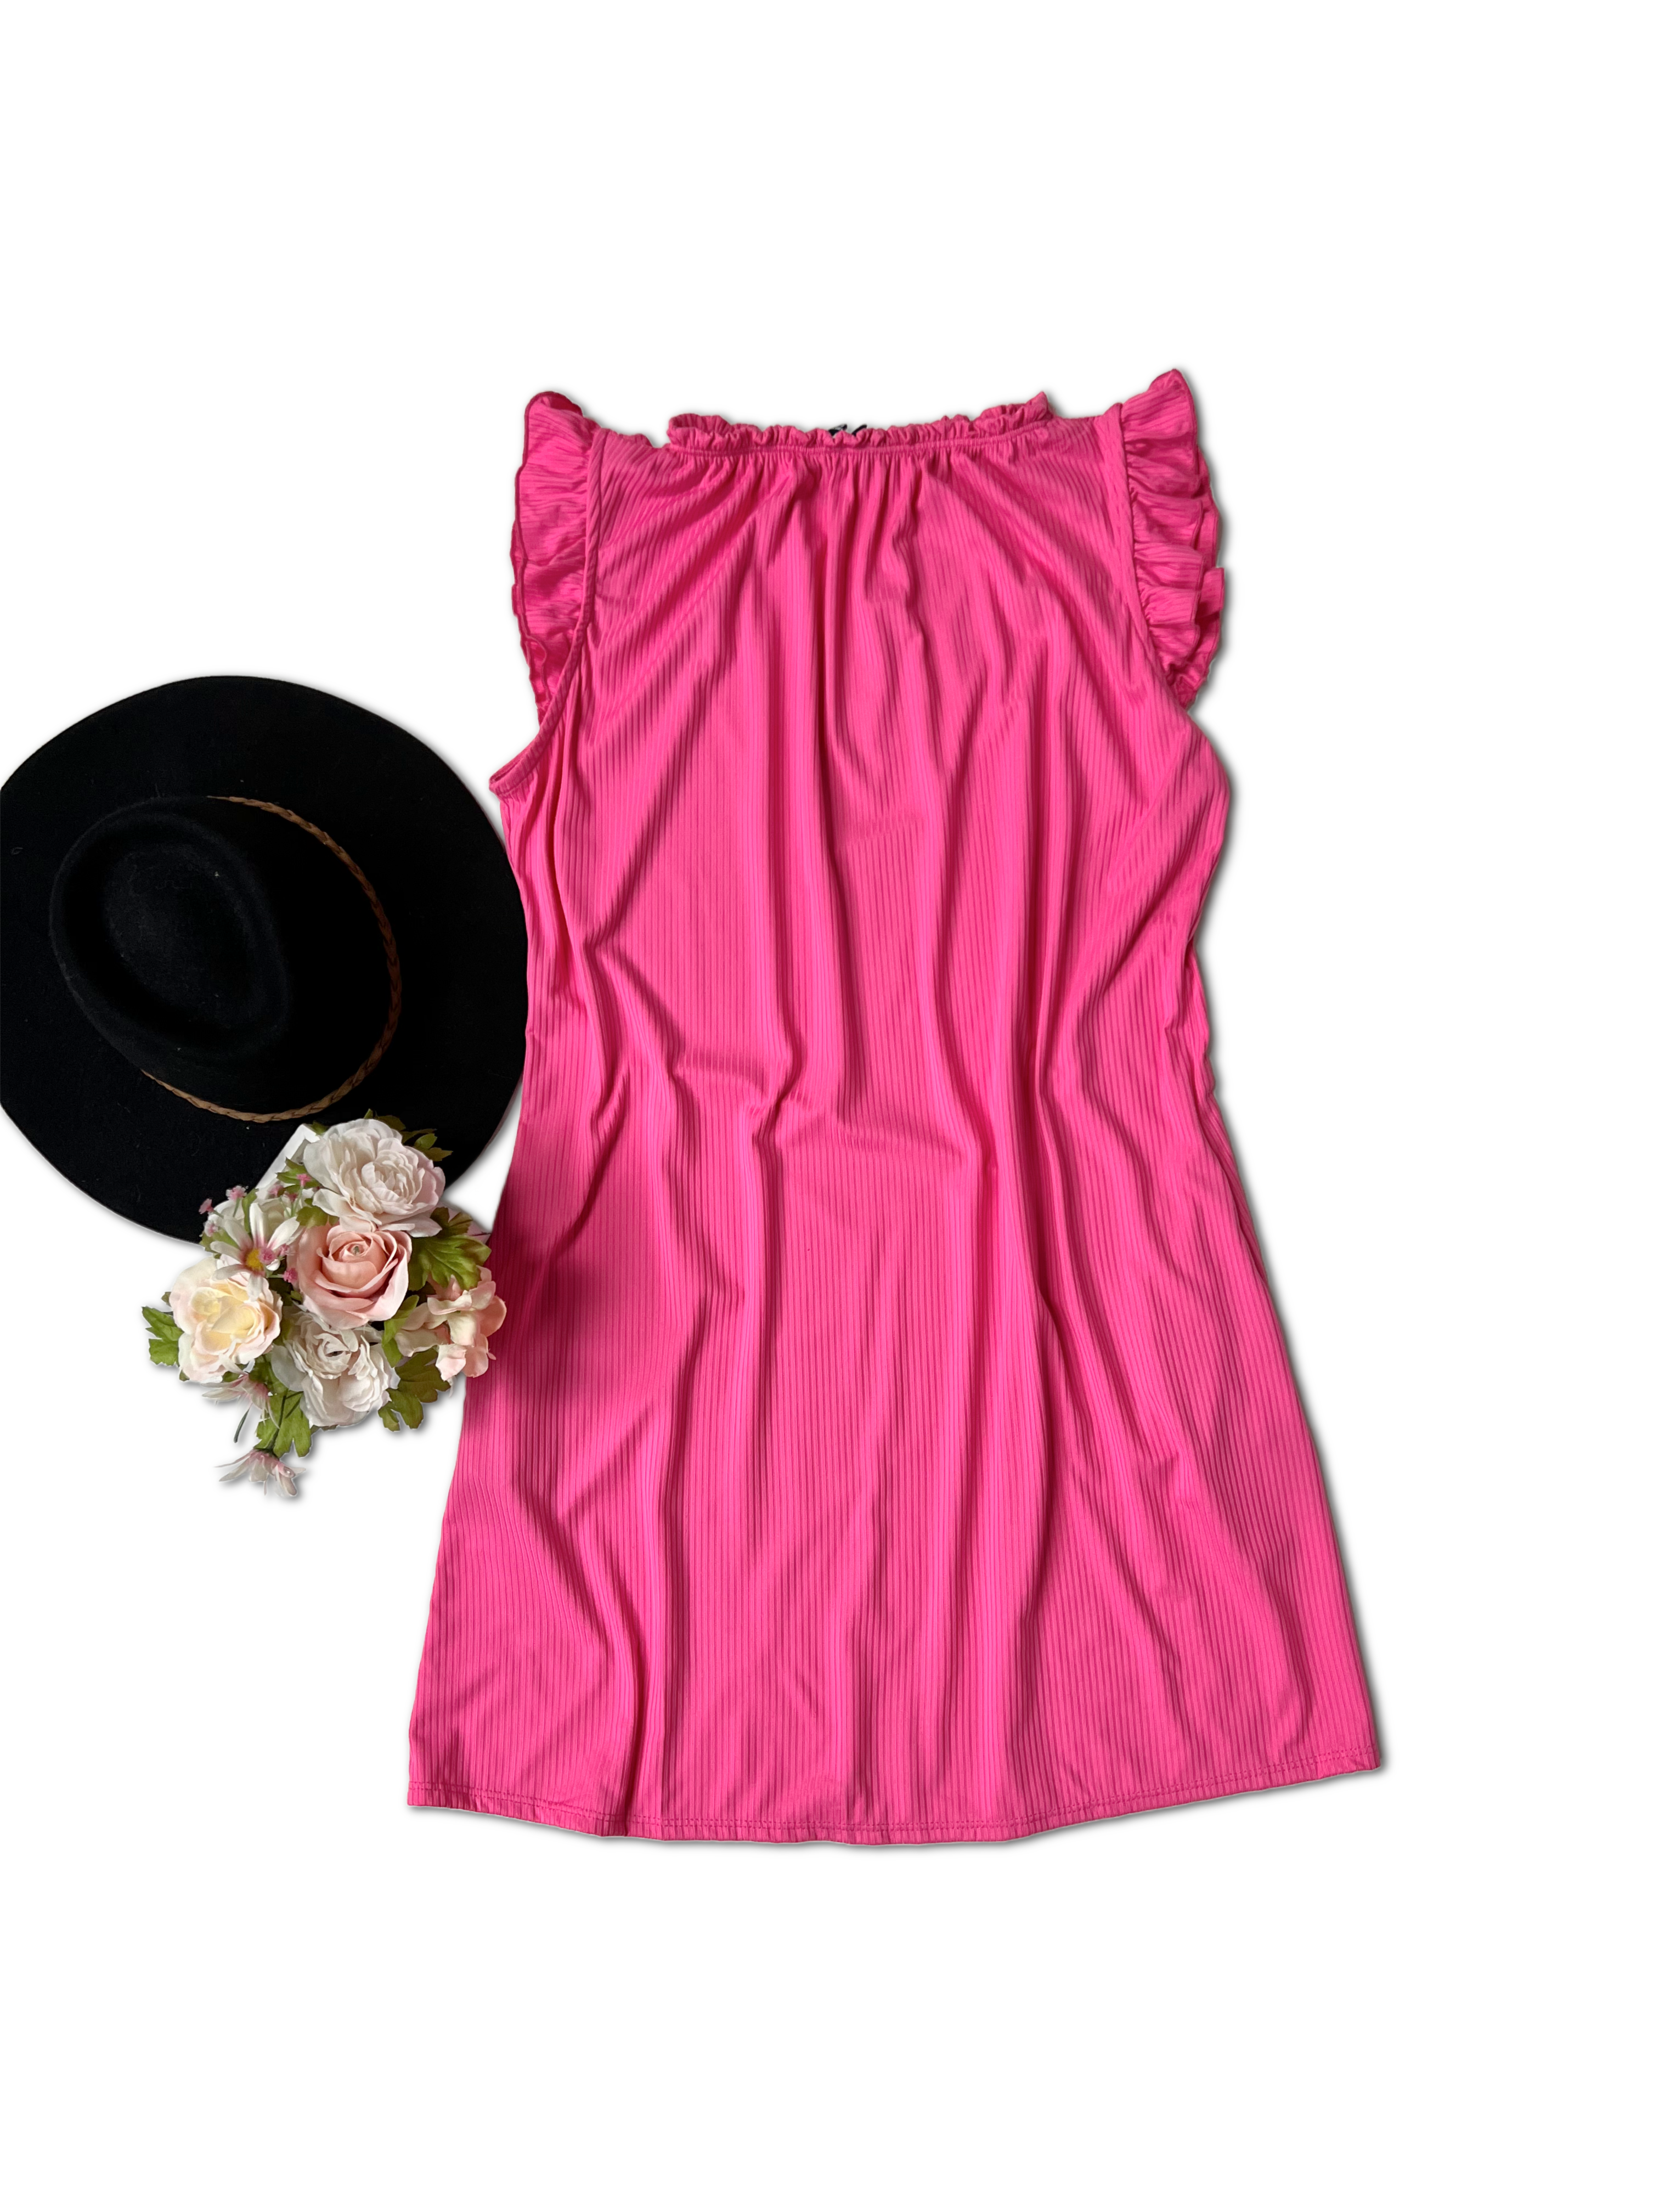 Kira Ruffle Sleeve Dress  Boutique Simplified   